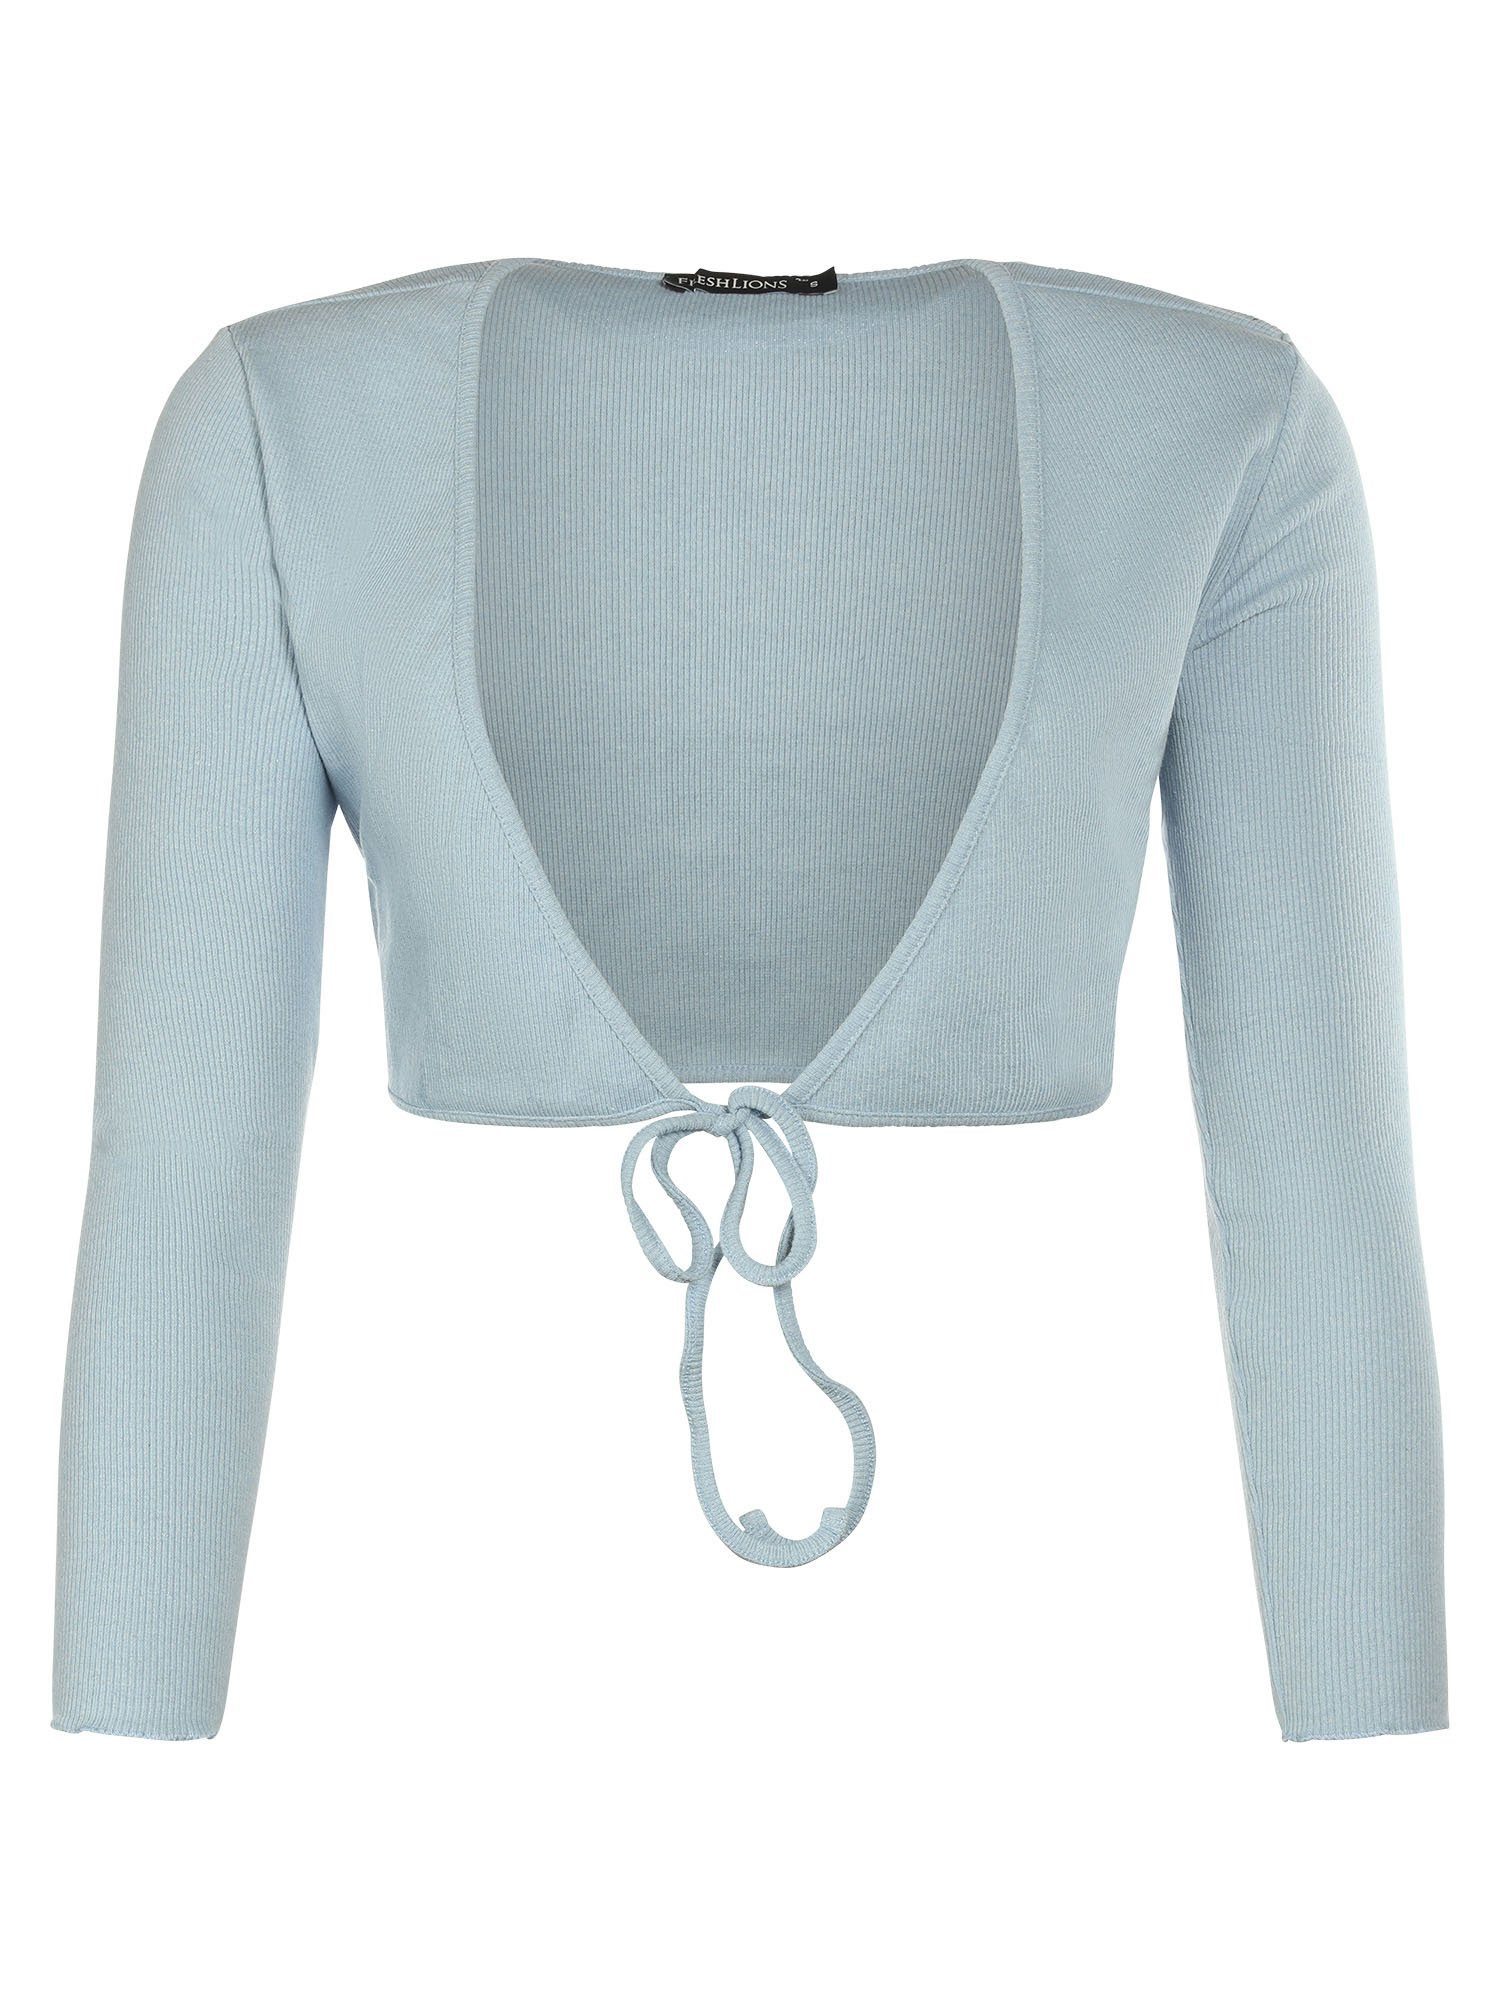 Freshlions Langarmbluse Top mit Bindegurt Wickel-Design 'Gigi' Blau